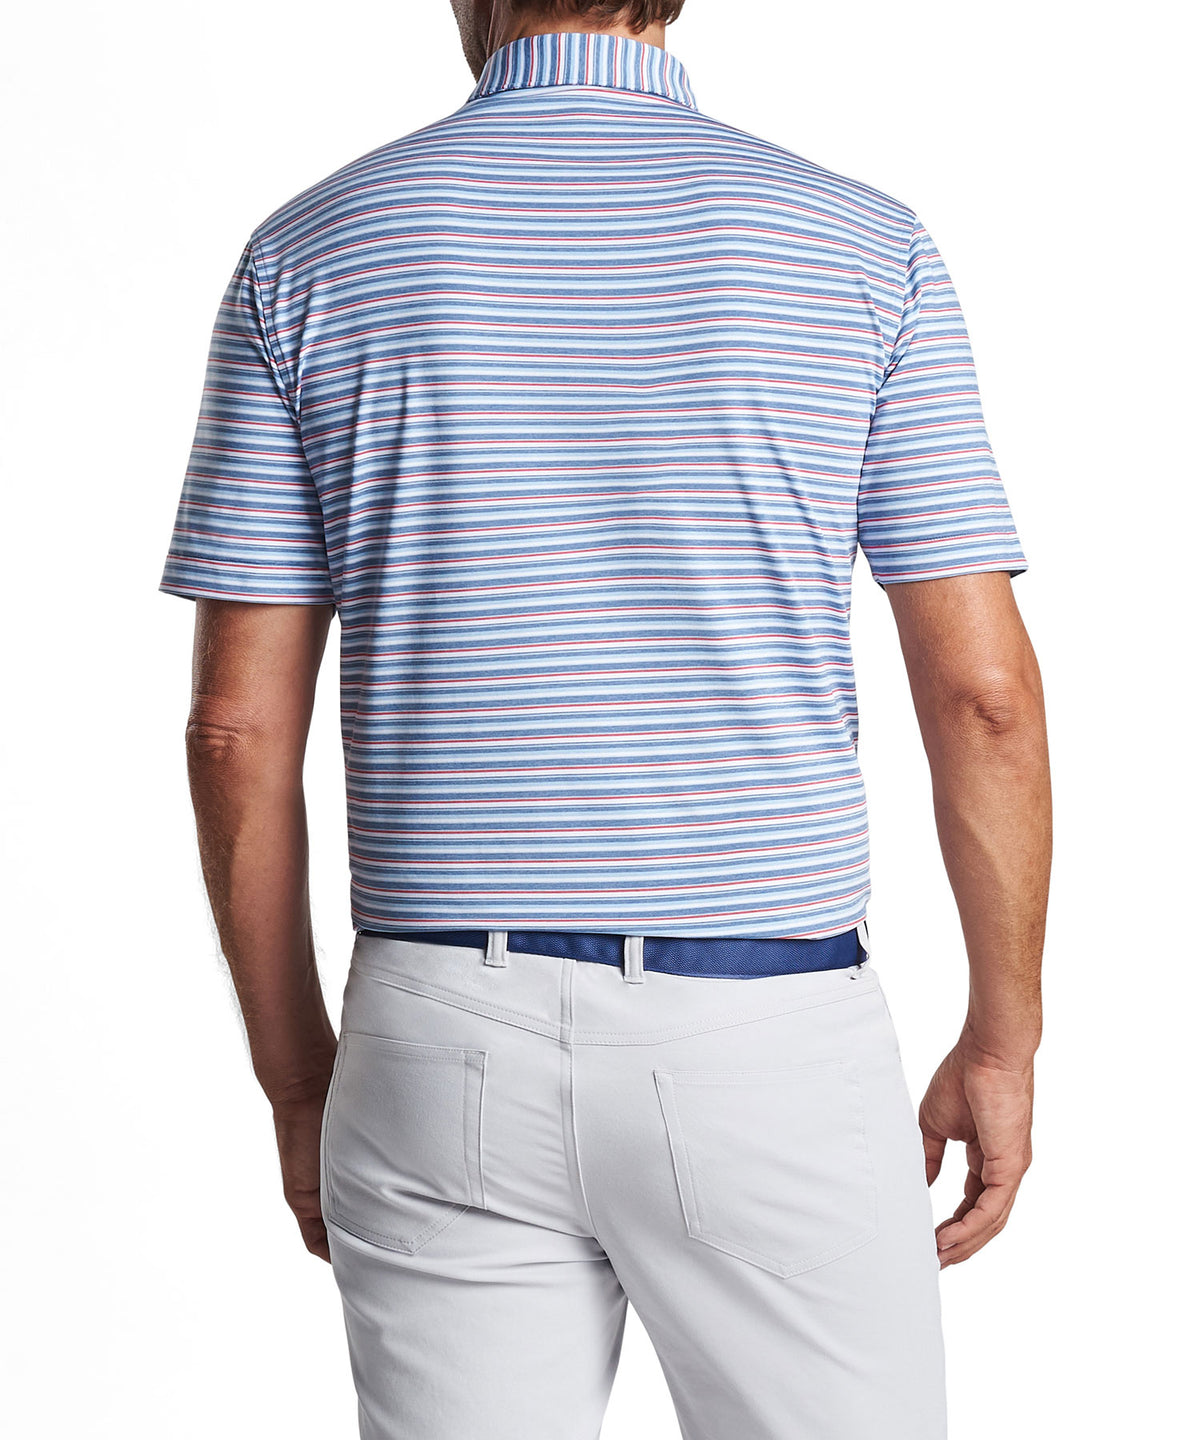 Peter Millar Short Sleeve Oakland Stripe Polo Knit Shirt, Big & Tall